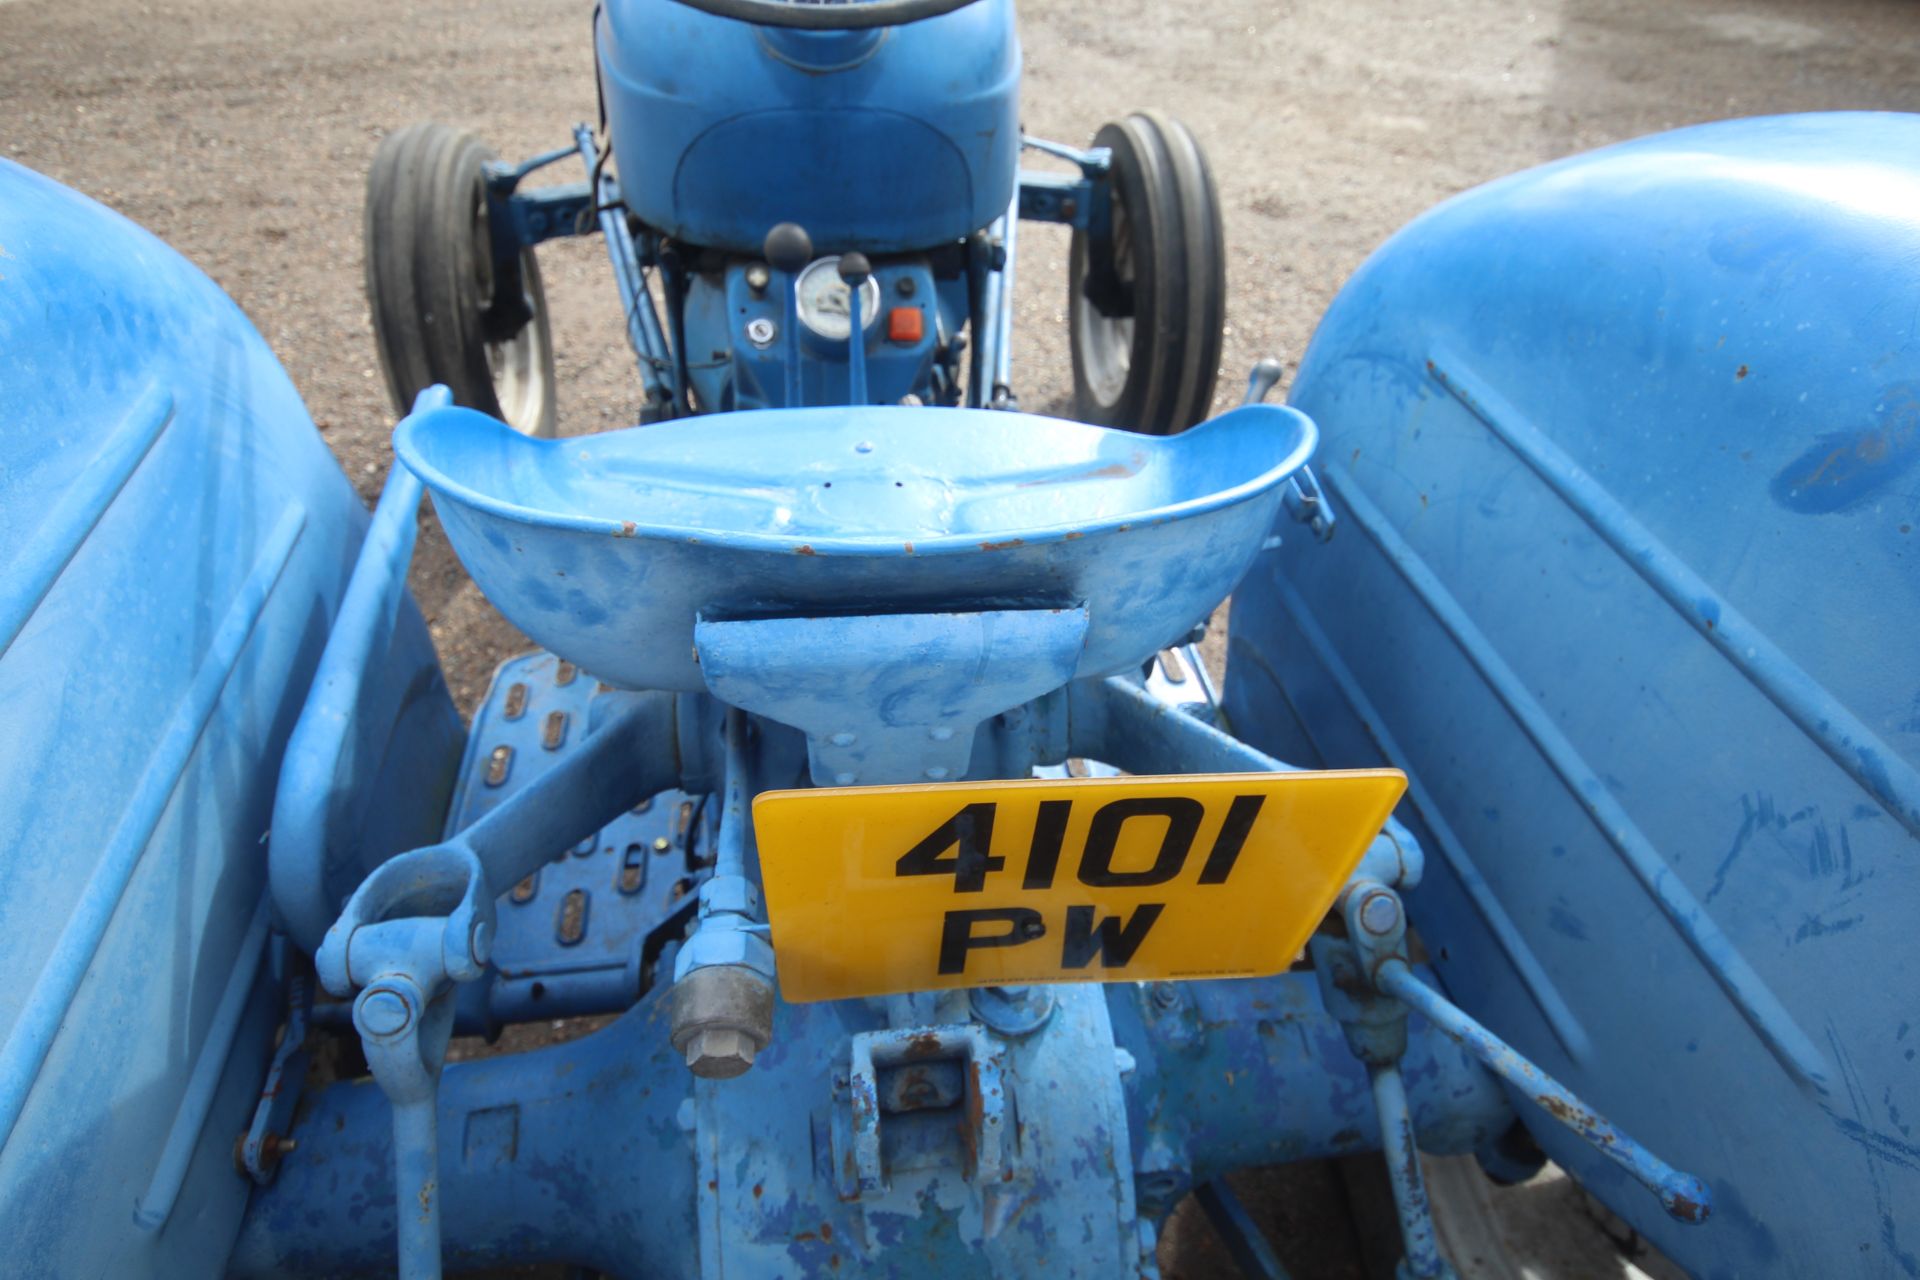 Fordson Dexta 2WD tractor. Registration 4101 PW. Date of first registration 02/02/1962. Key, V5 - Bild 24 aus 51